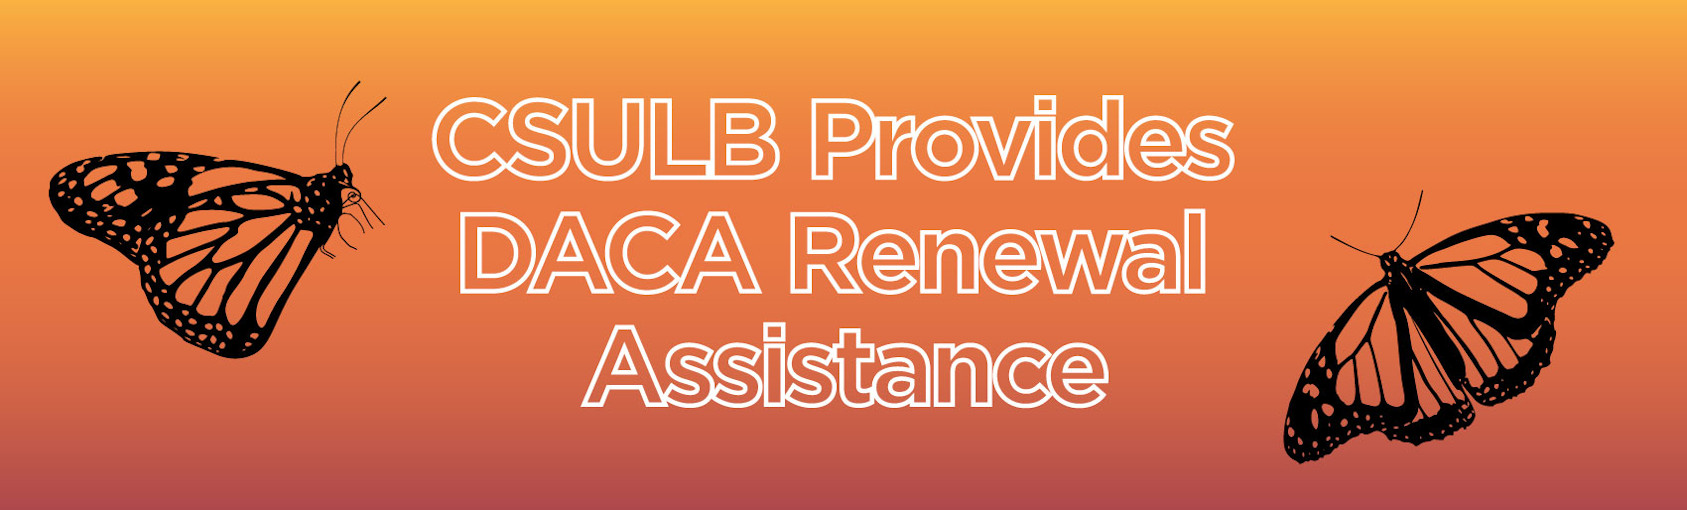 CSULB Provides DACA Renewal Assistance Banner